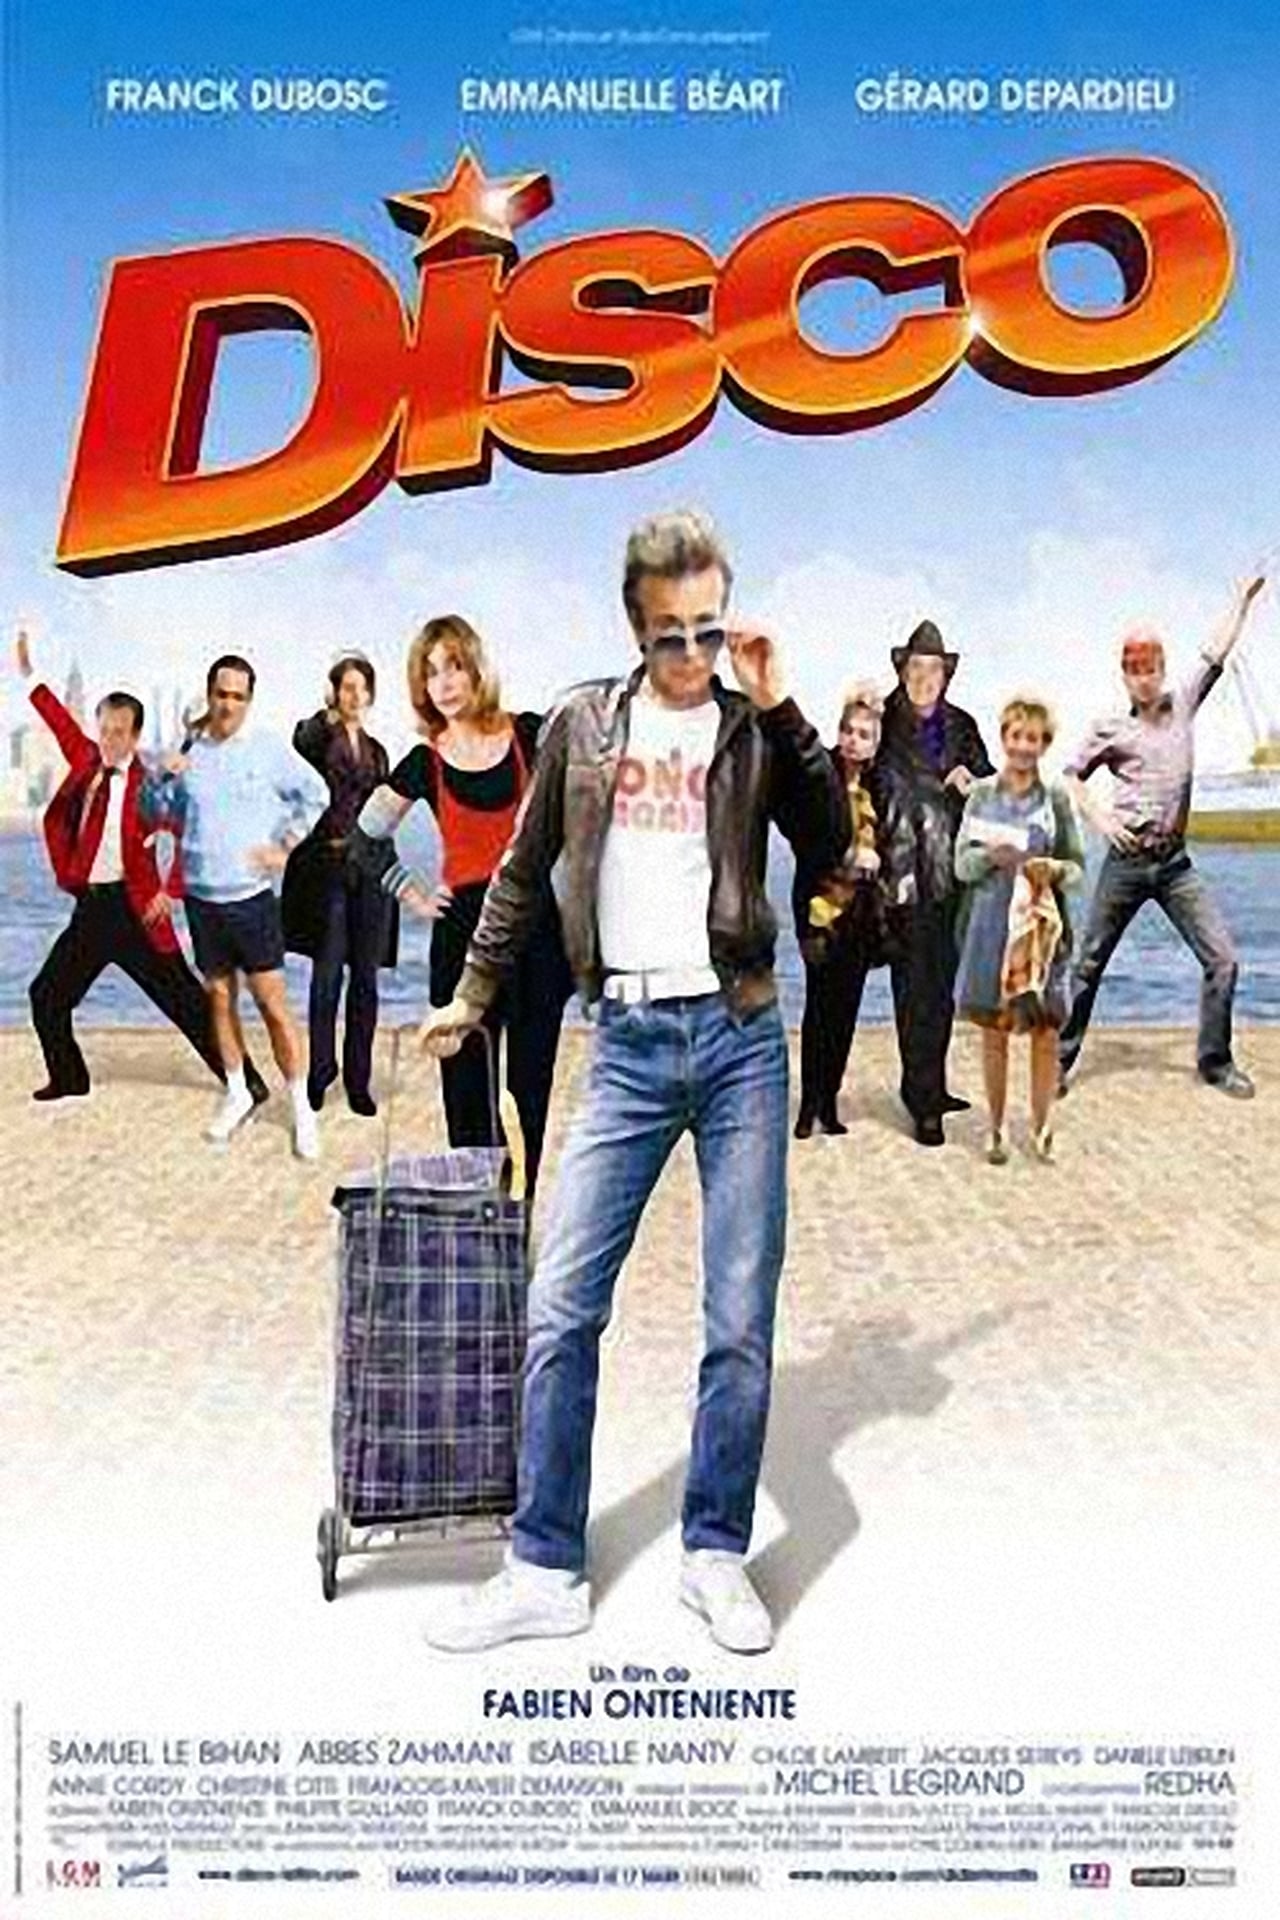 FR - Disco (2008) - FRANCK DUBOSC